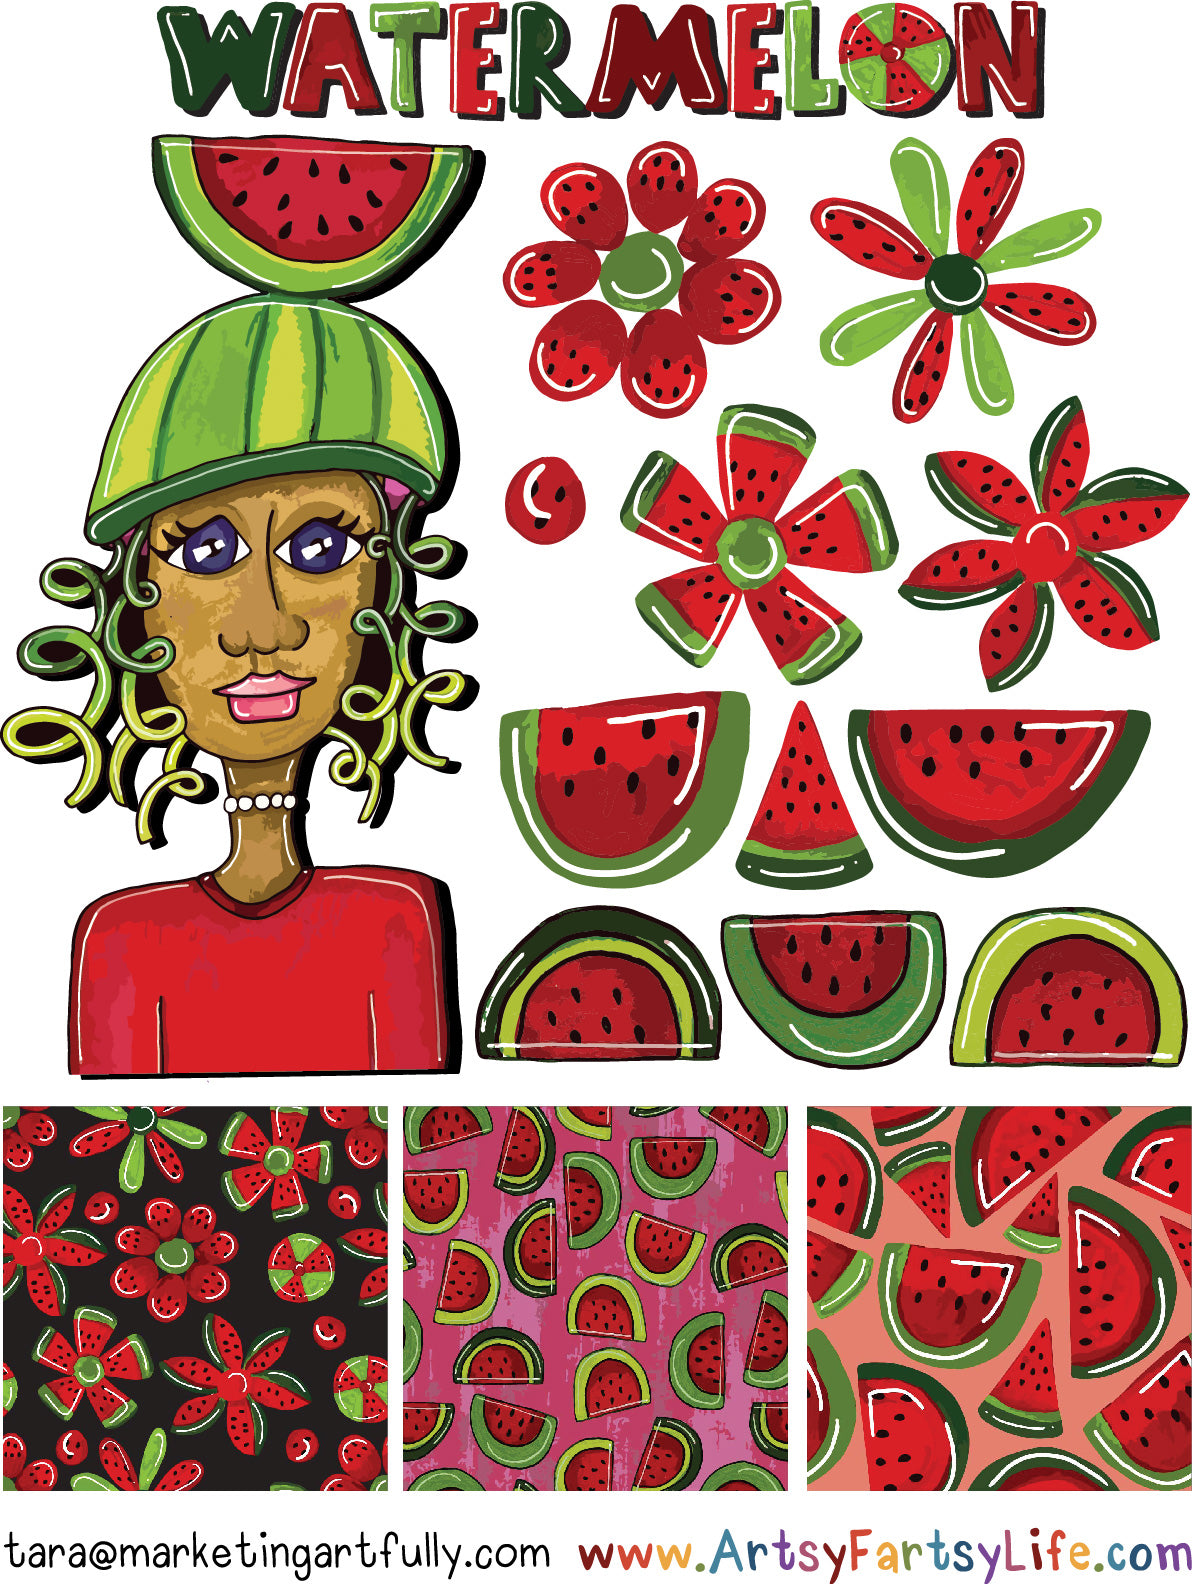 Watermelon Woman Surface Design For Wall Art